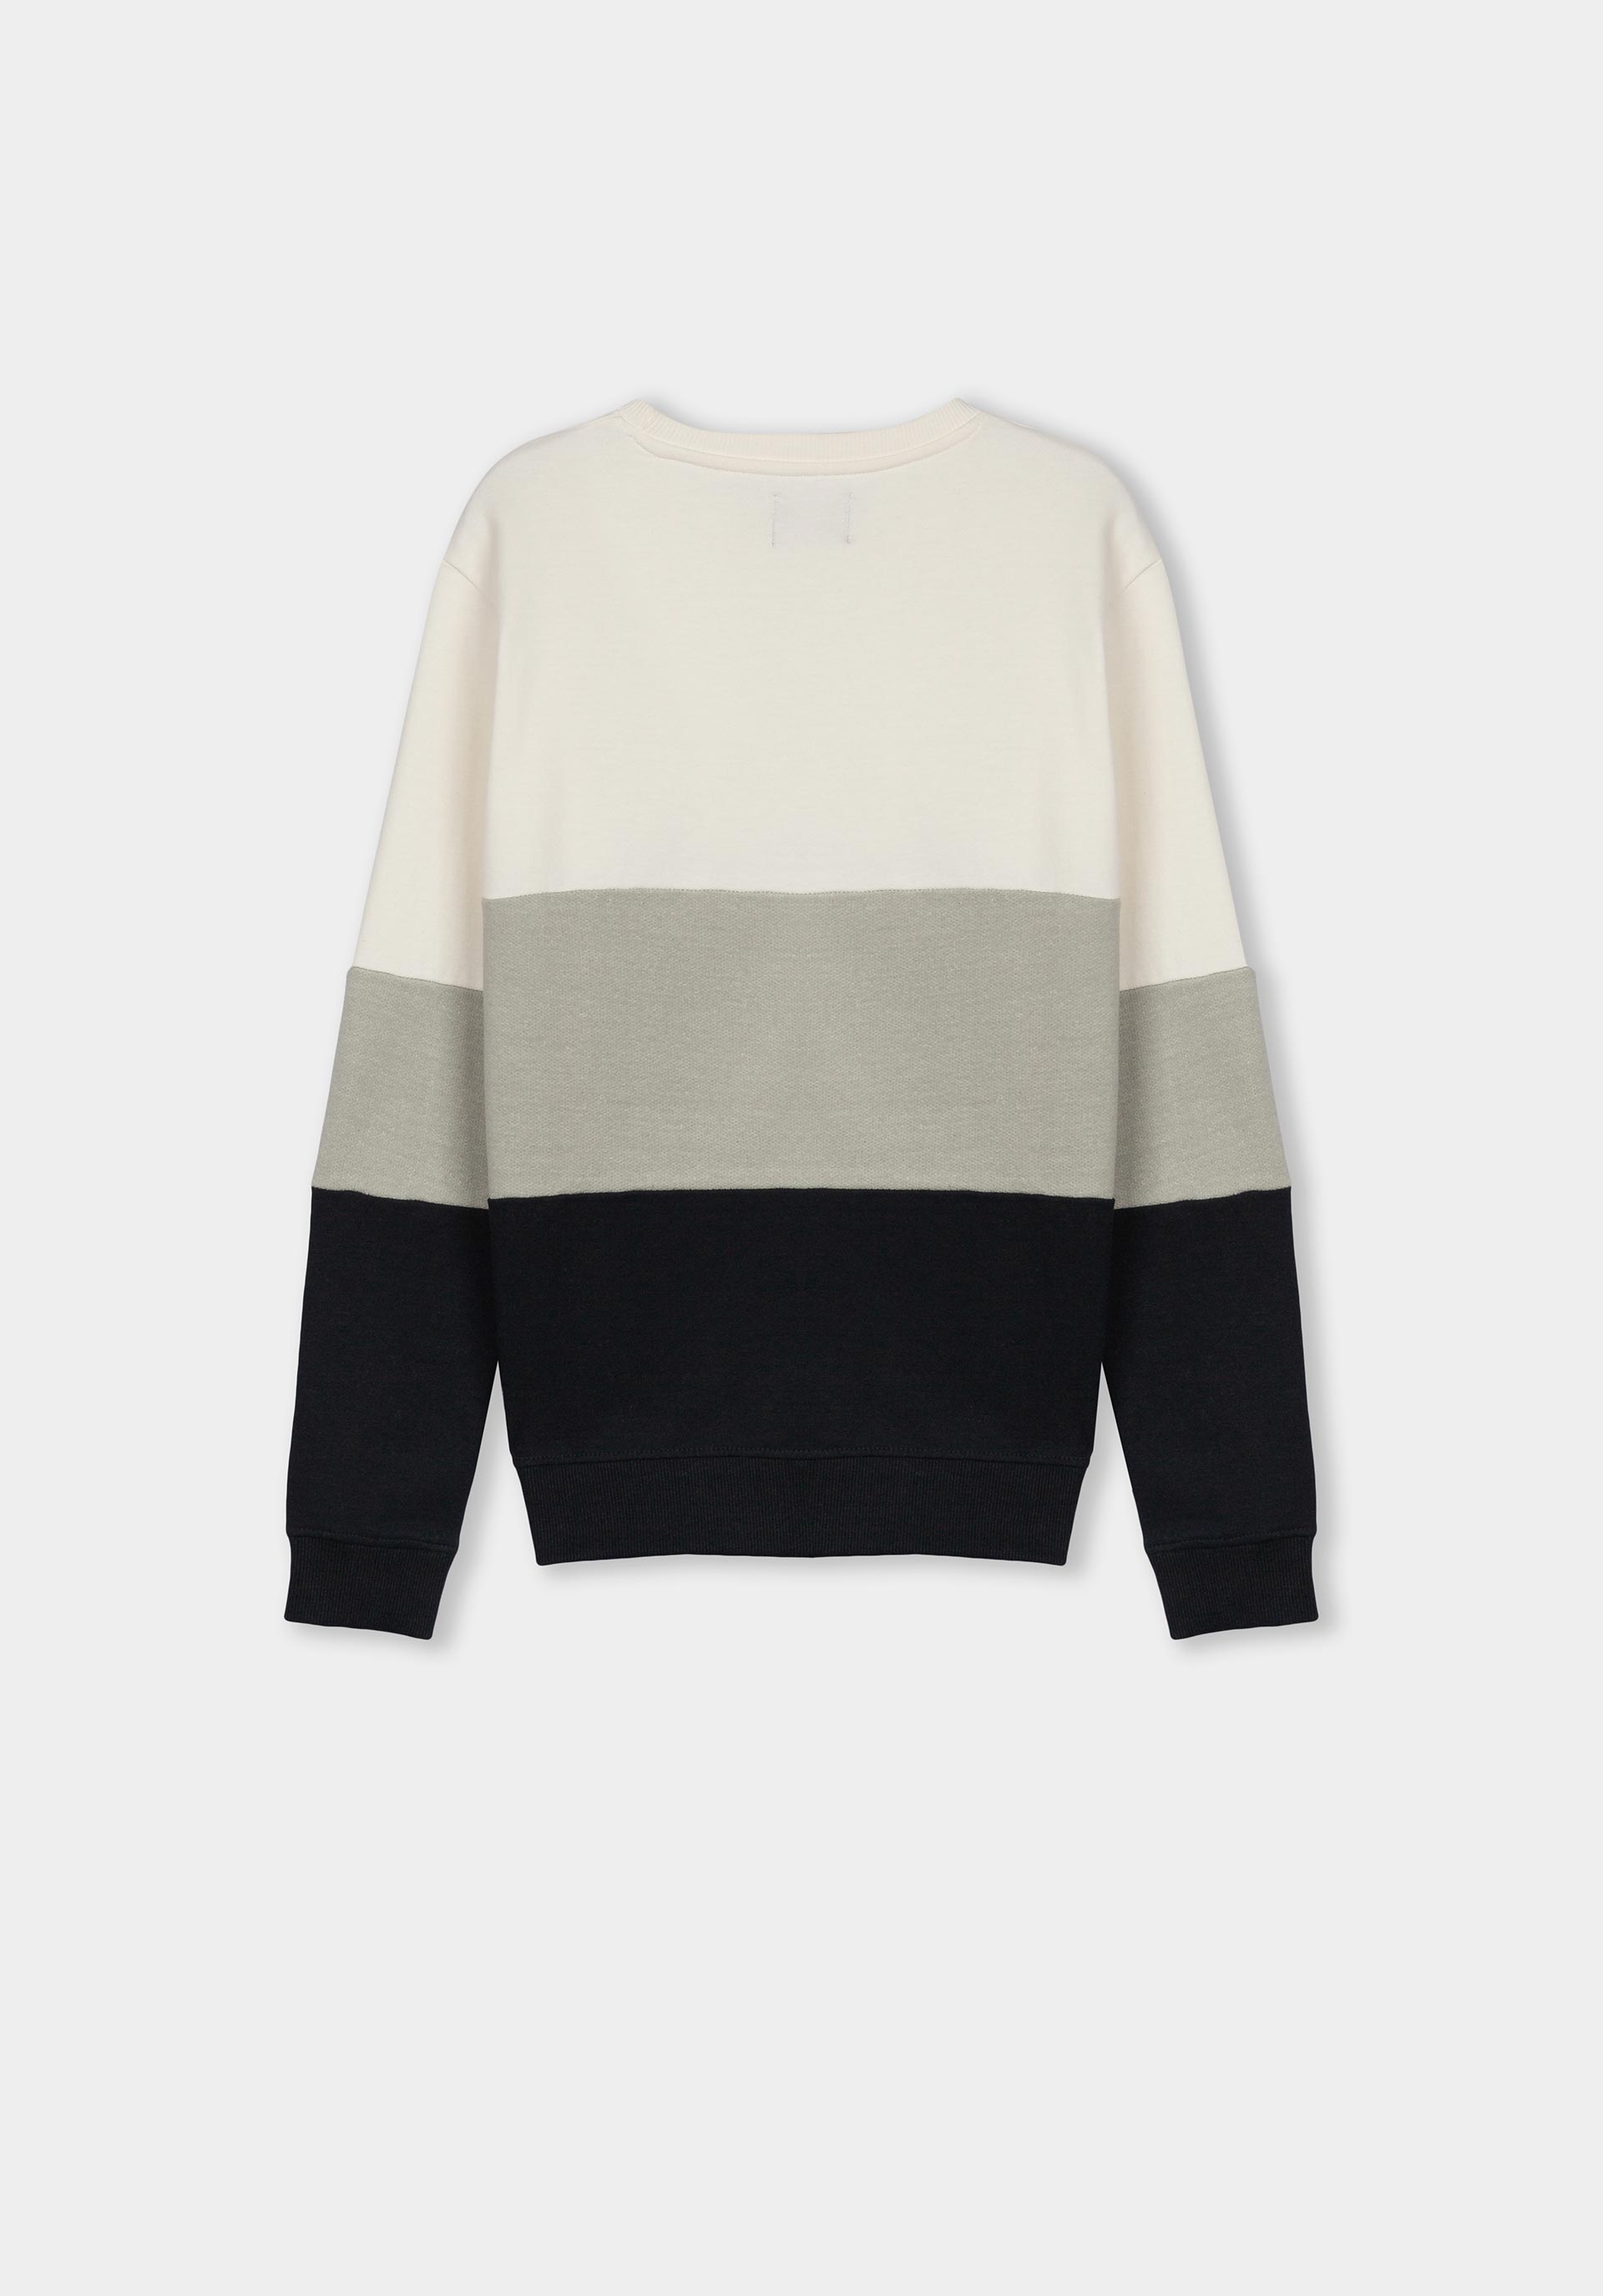 Tiffosi sweater colorblock Across The Universe